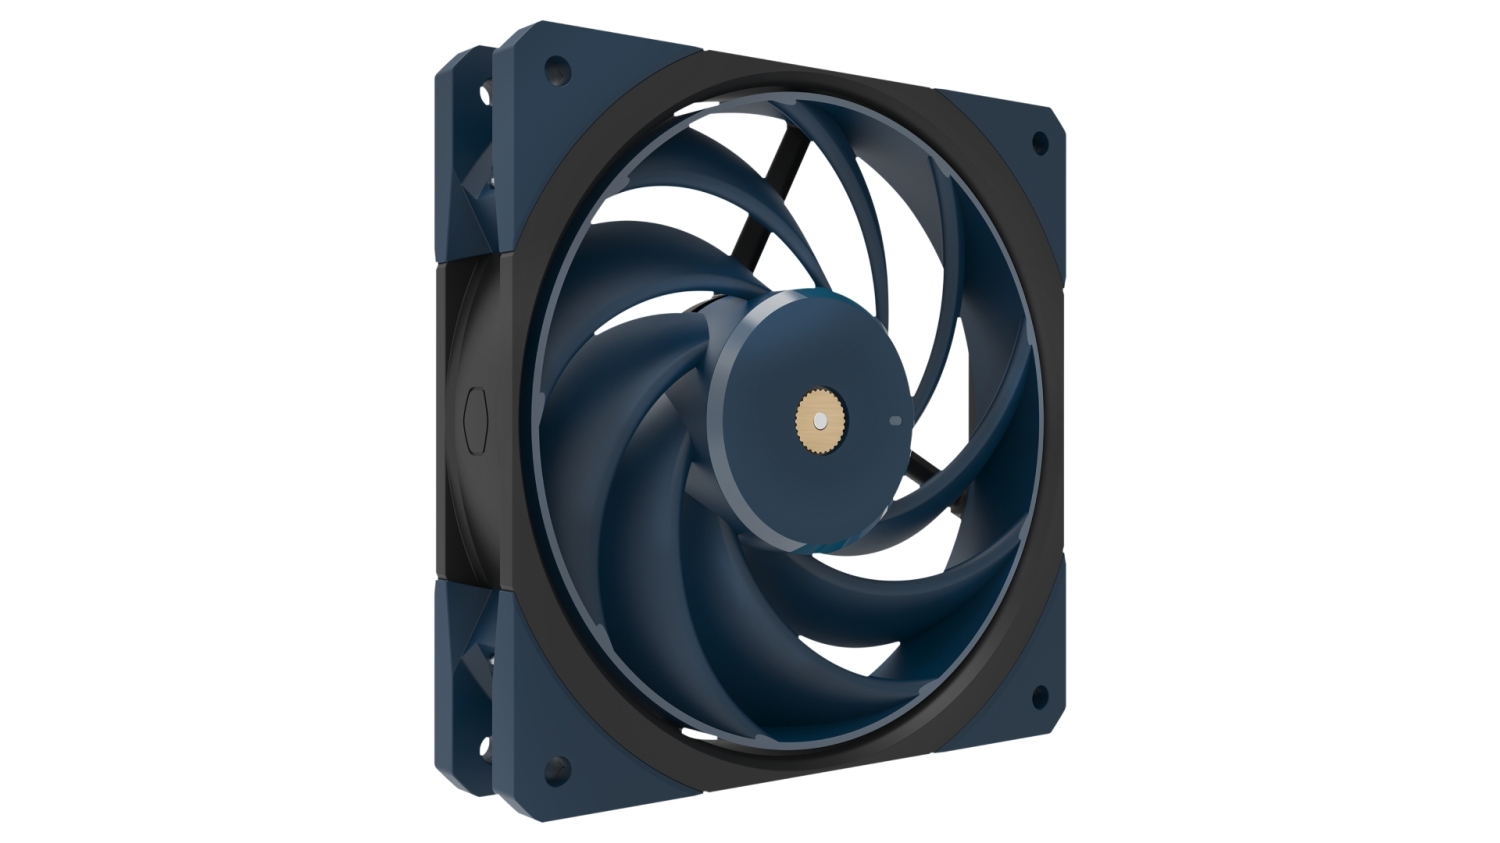 TweakTown Enlarged Image - Cooler Master Mobius 120 OC case fan